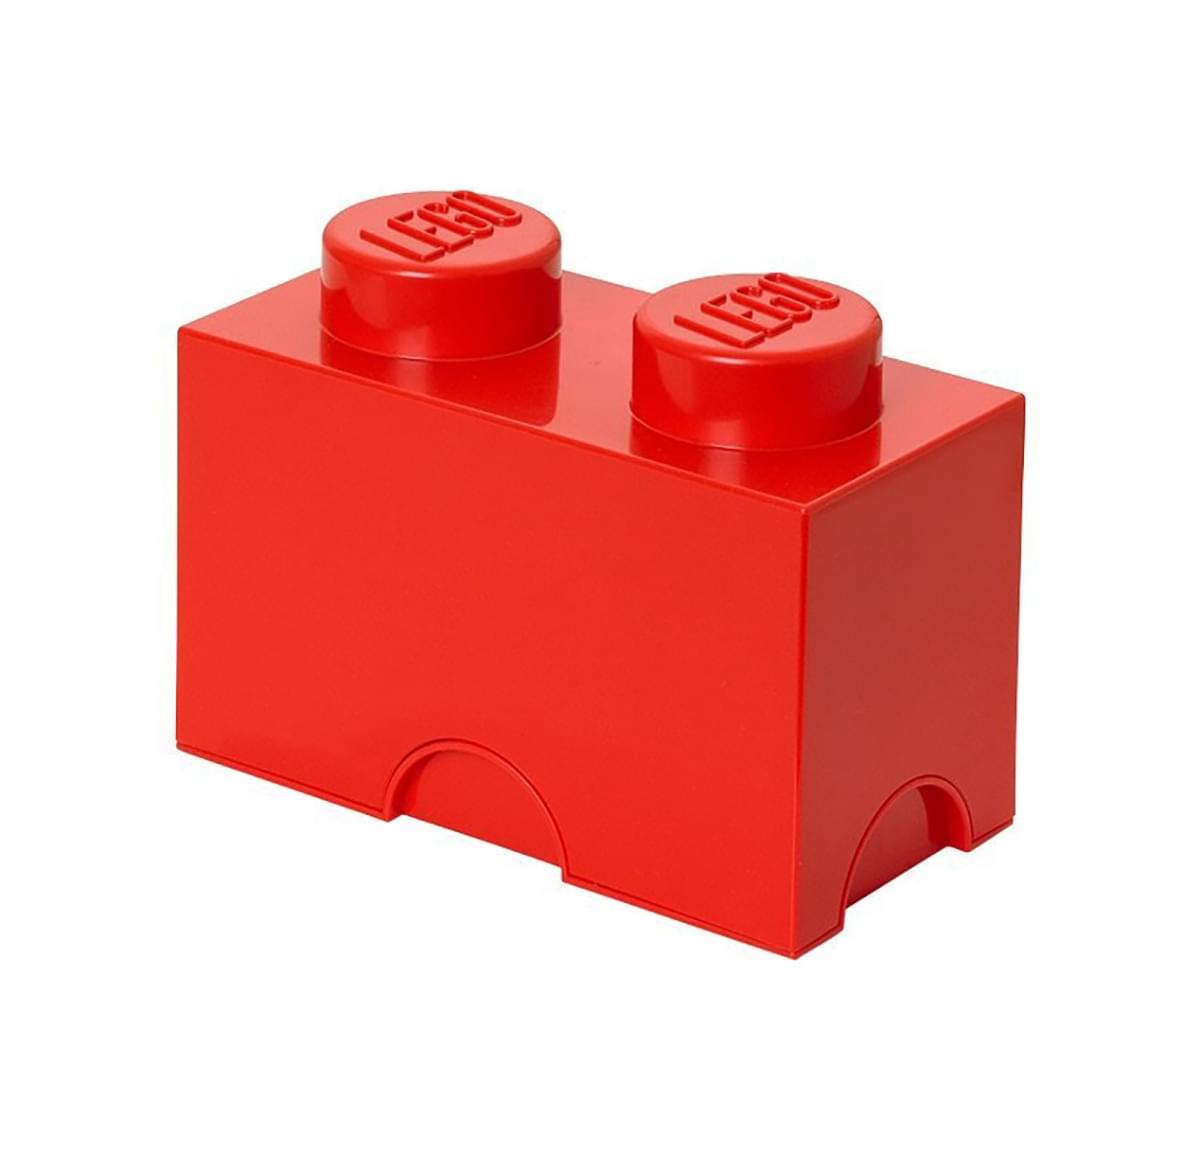 LEGO Storage Brick 2, Bright Red